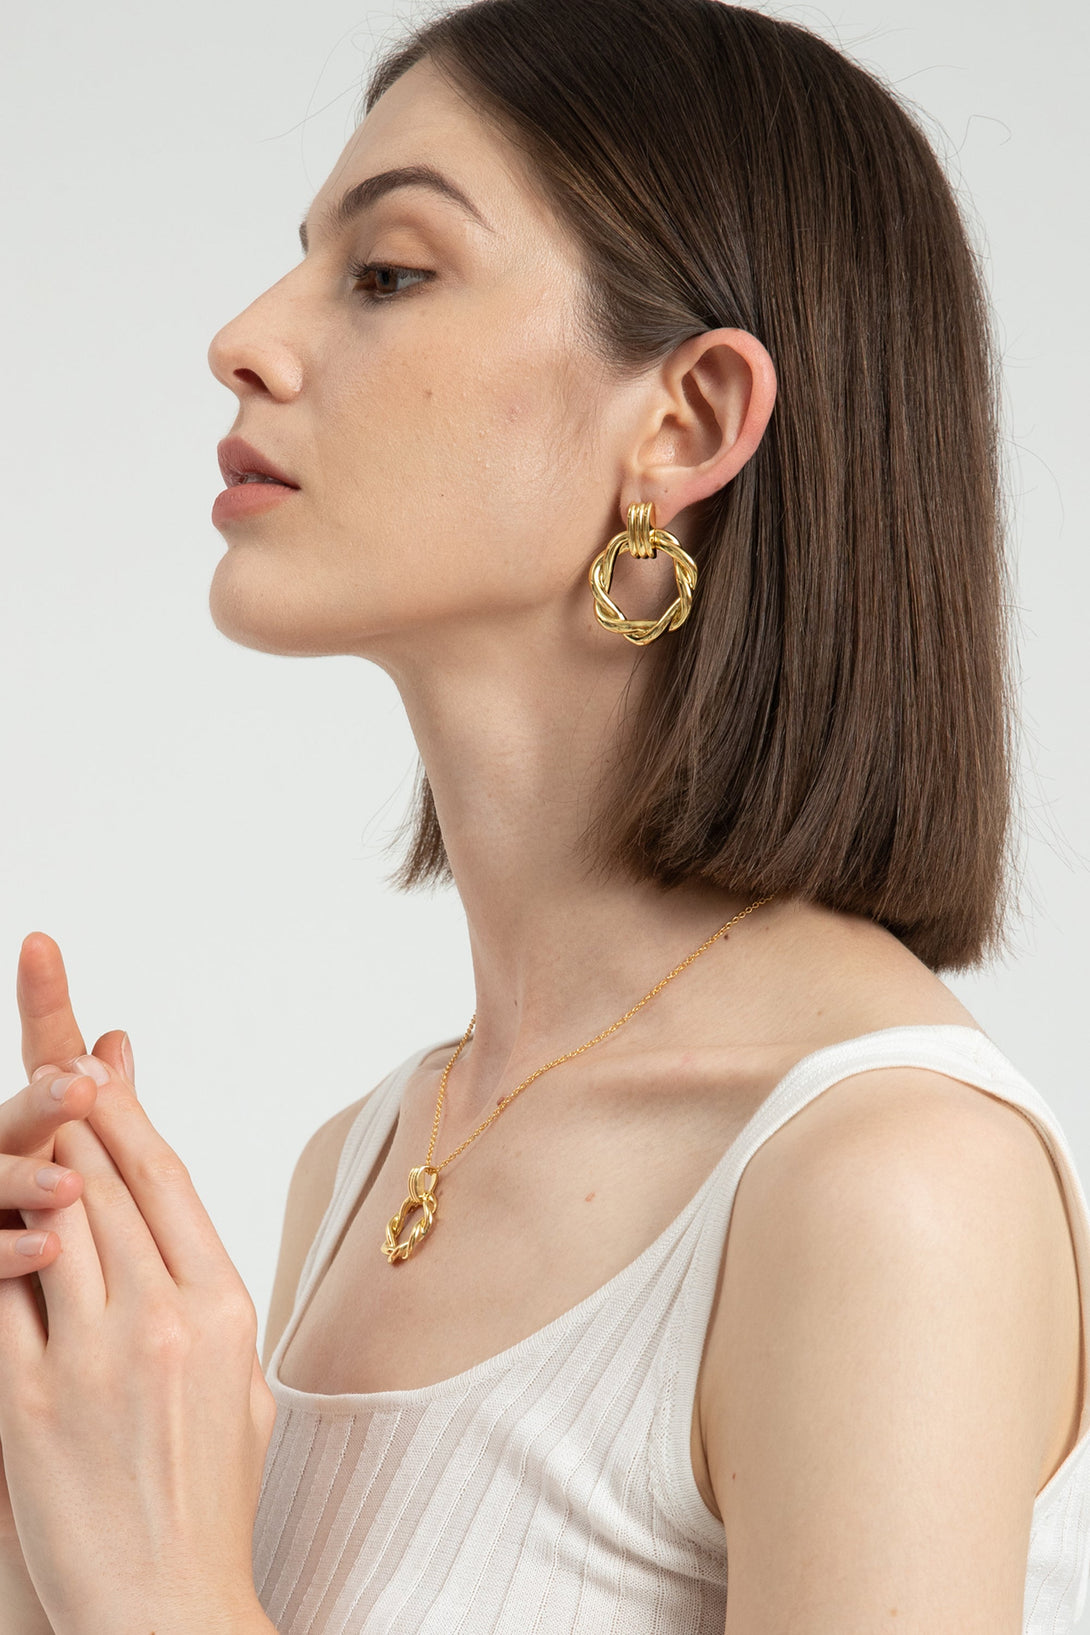 Eléa Gold Twisted Hoop Earrings - Classicharms